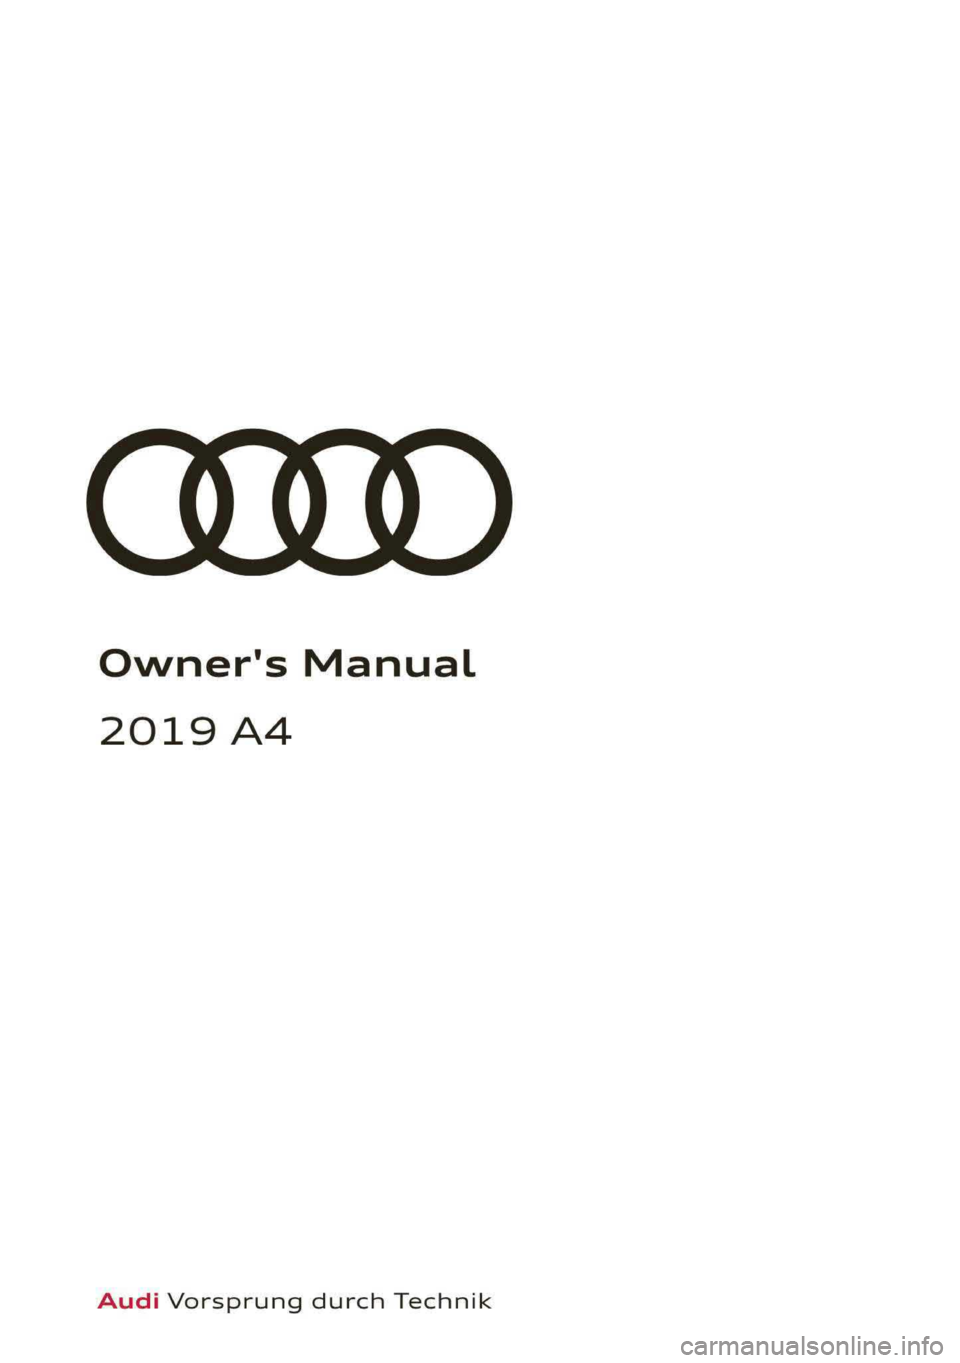 AUDI S4 2019  Owners Manual Owner'sManual
2019A4
AudiVorsprungdurchTechnik  